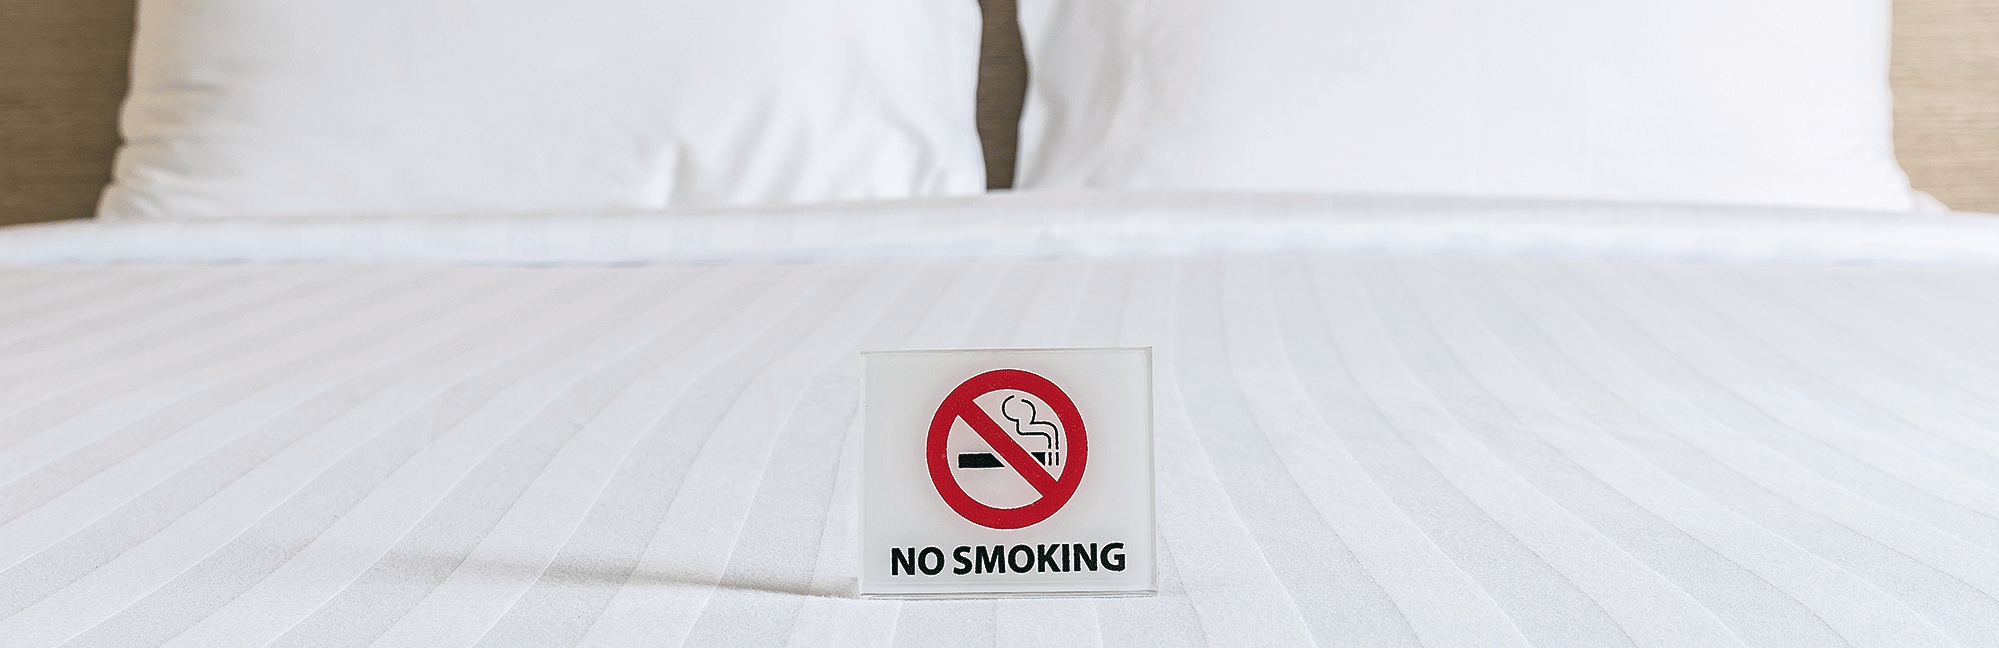 Best Way To Smoke In A Hotel Room Discreetly Hemper